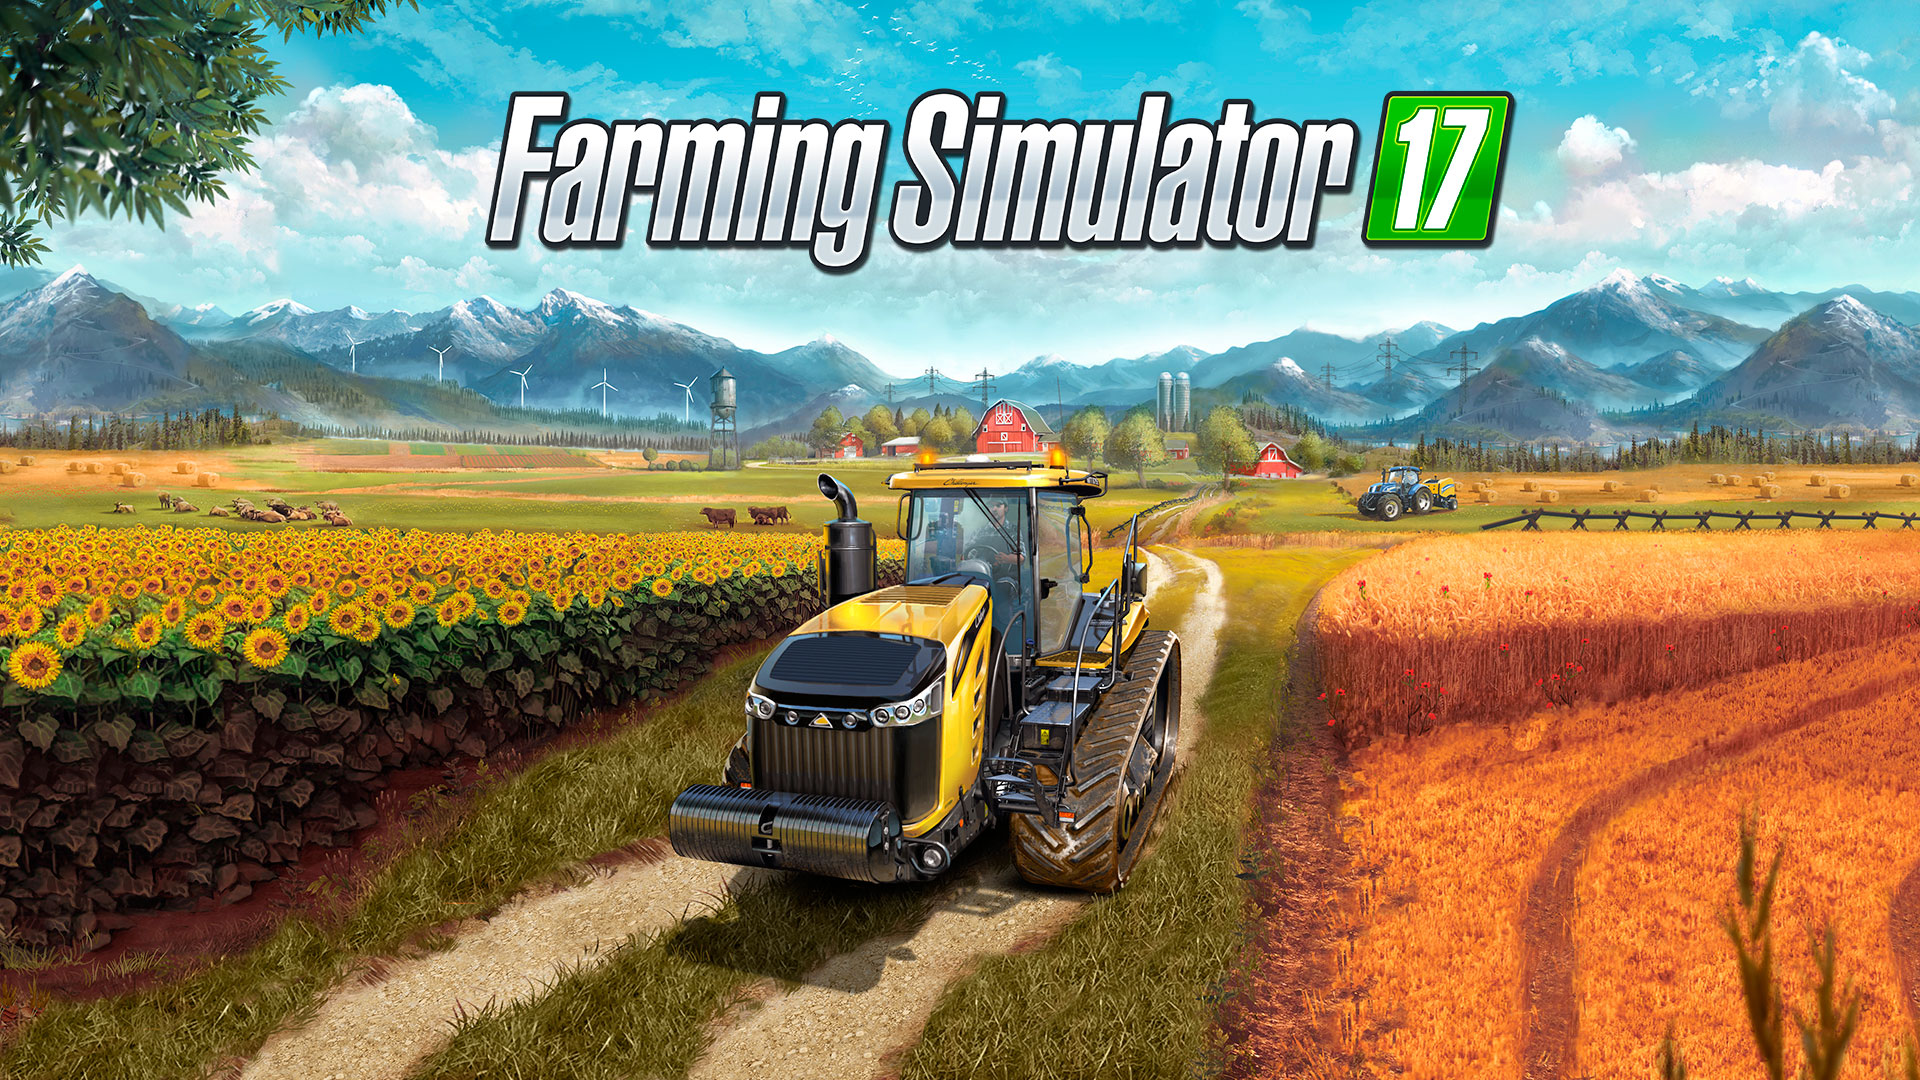 download farming sim 13 for free